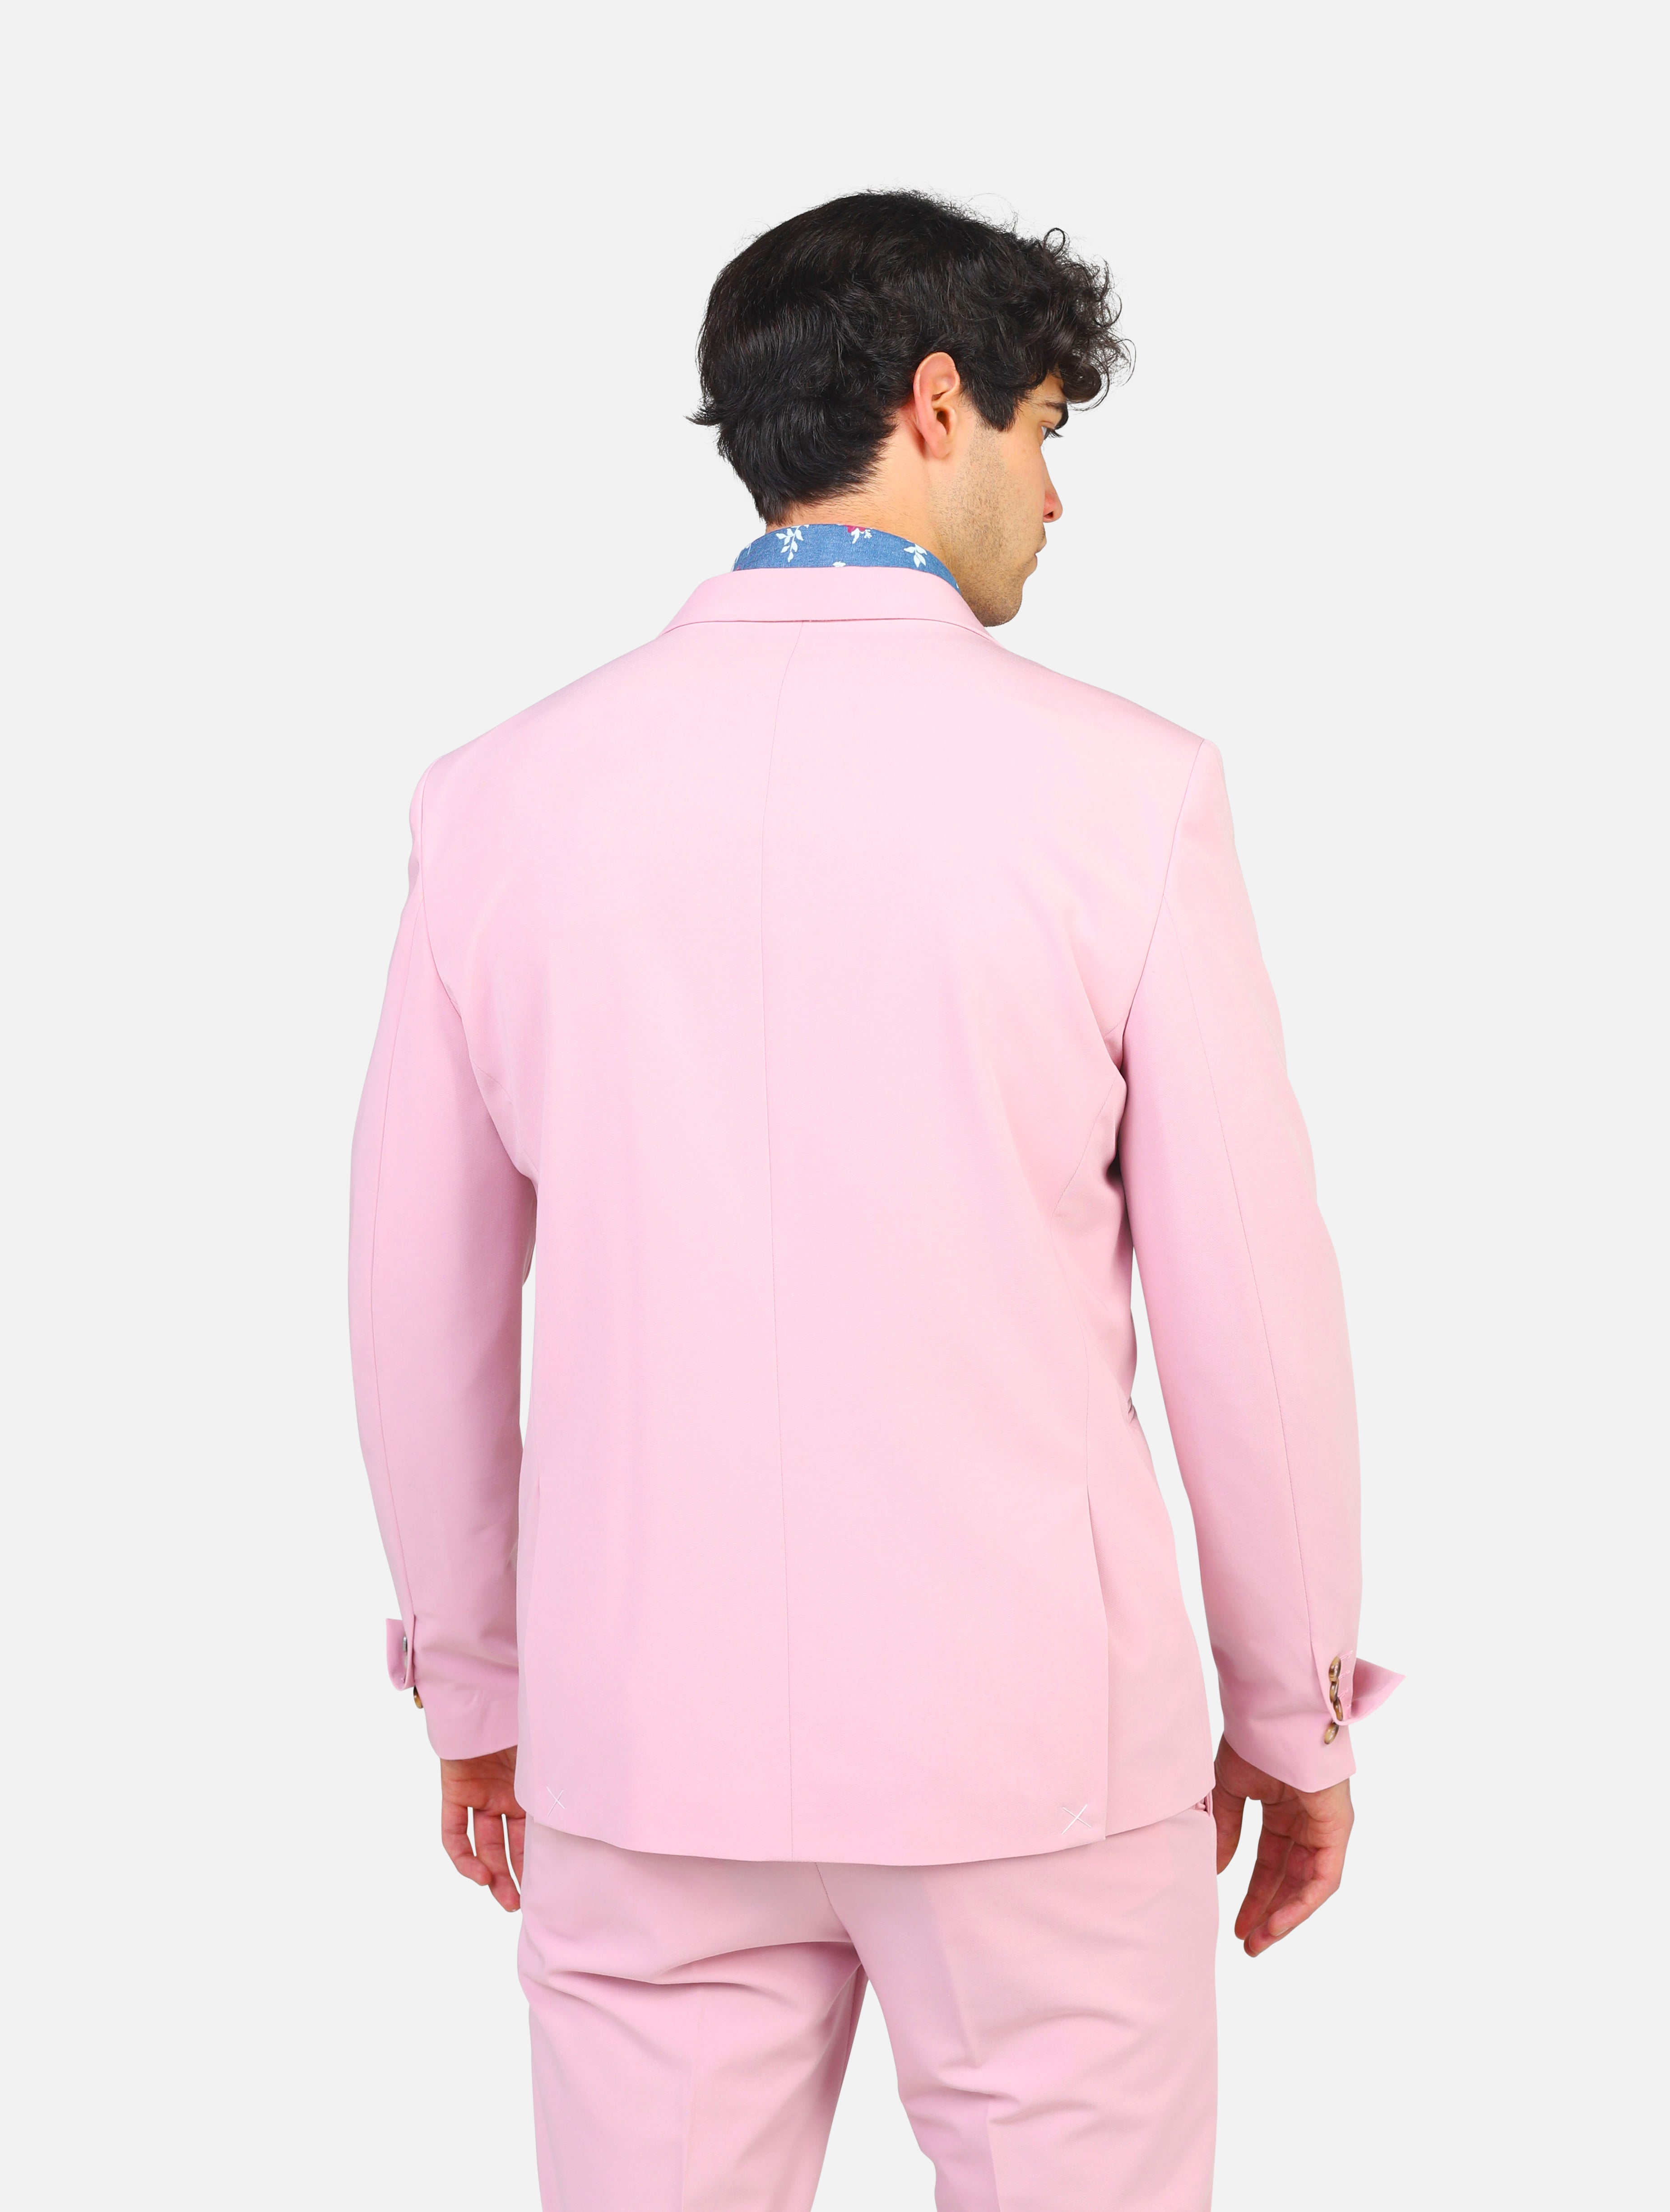 Giacca con pantalone officina 36 - 9001 alexis rosa rosa man  - 4